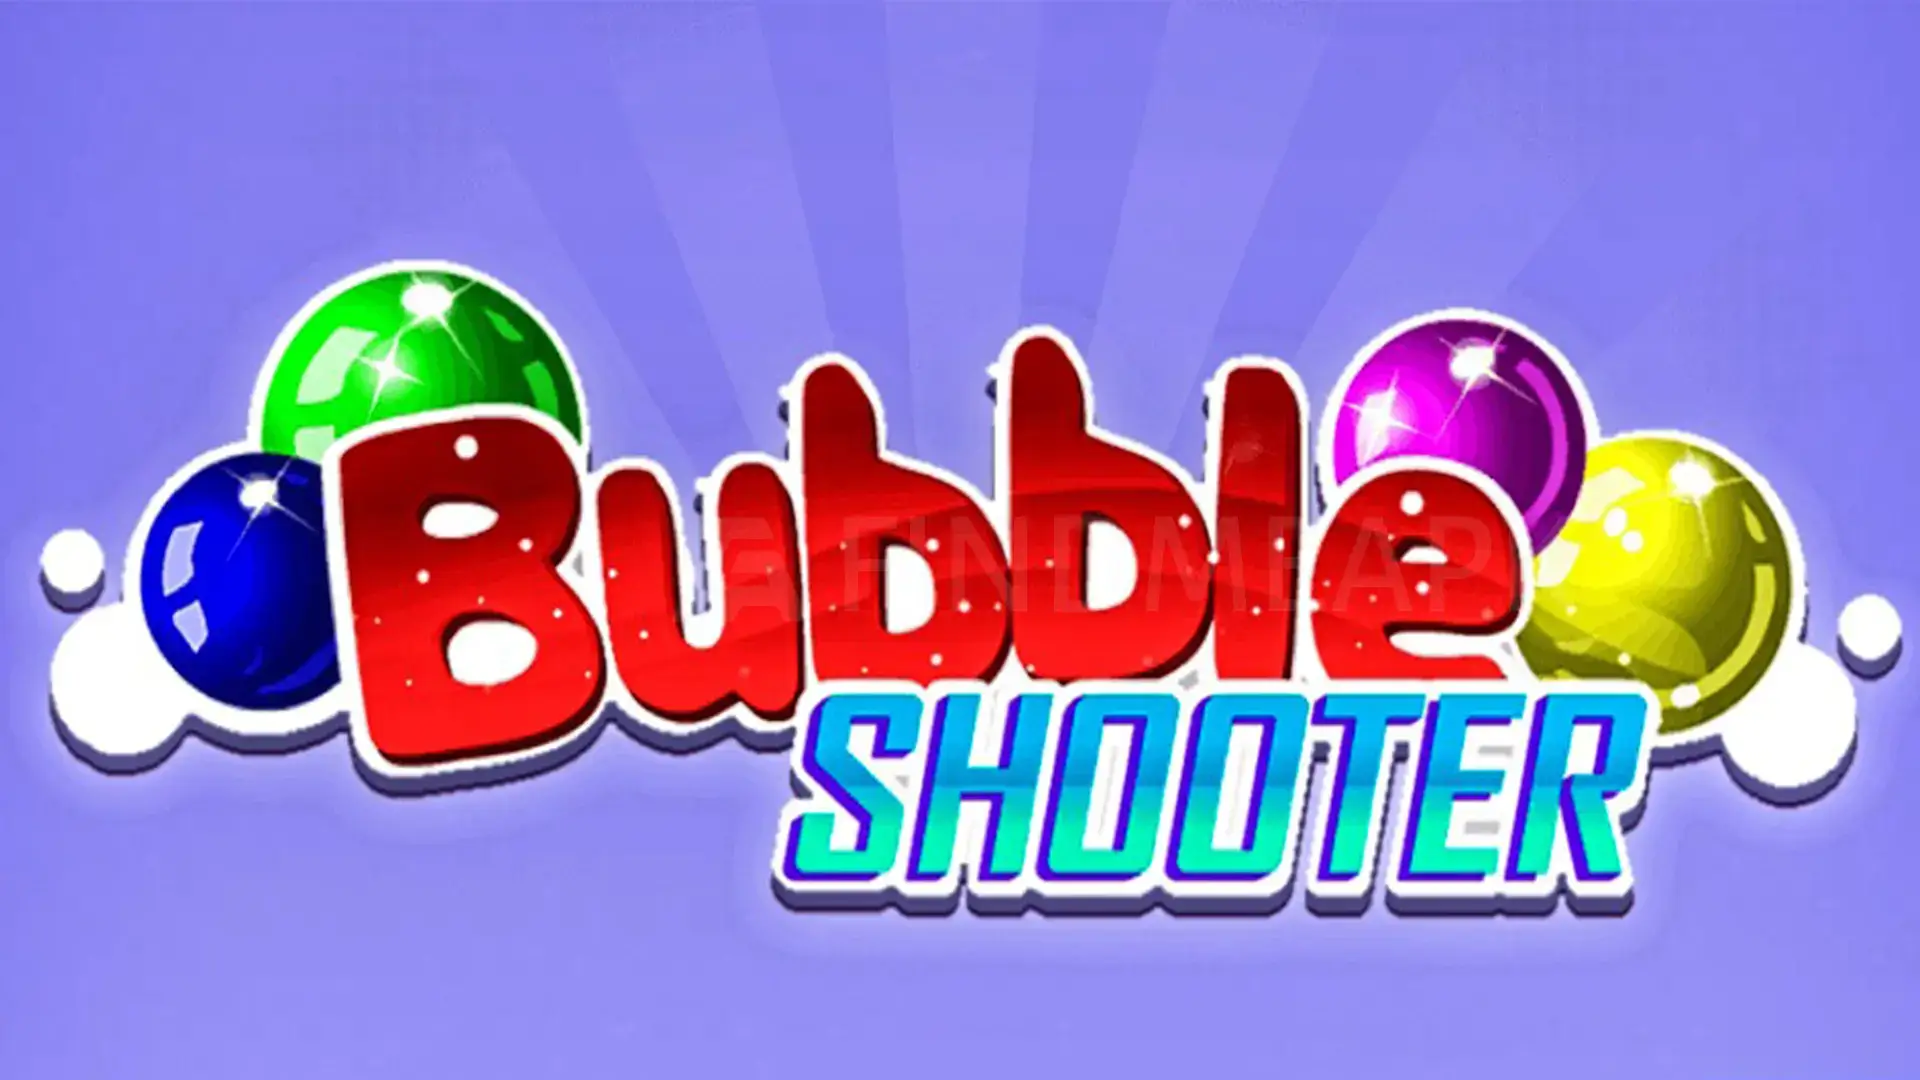 Bubble Shooter Apk Mod No Ads, Direct Download